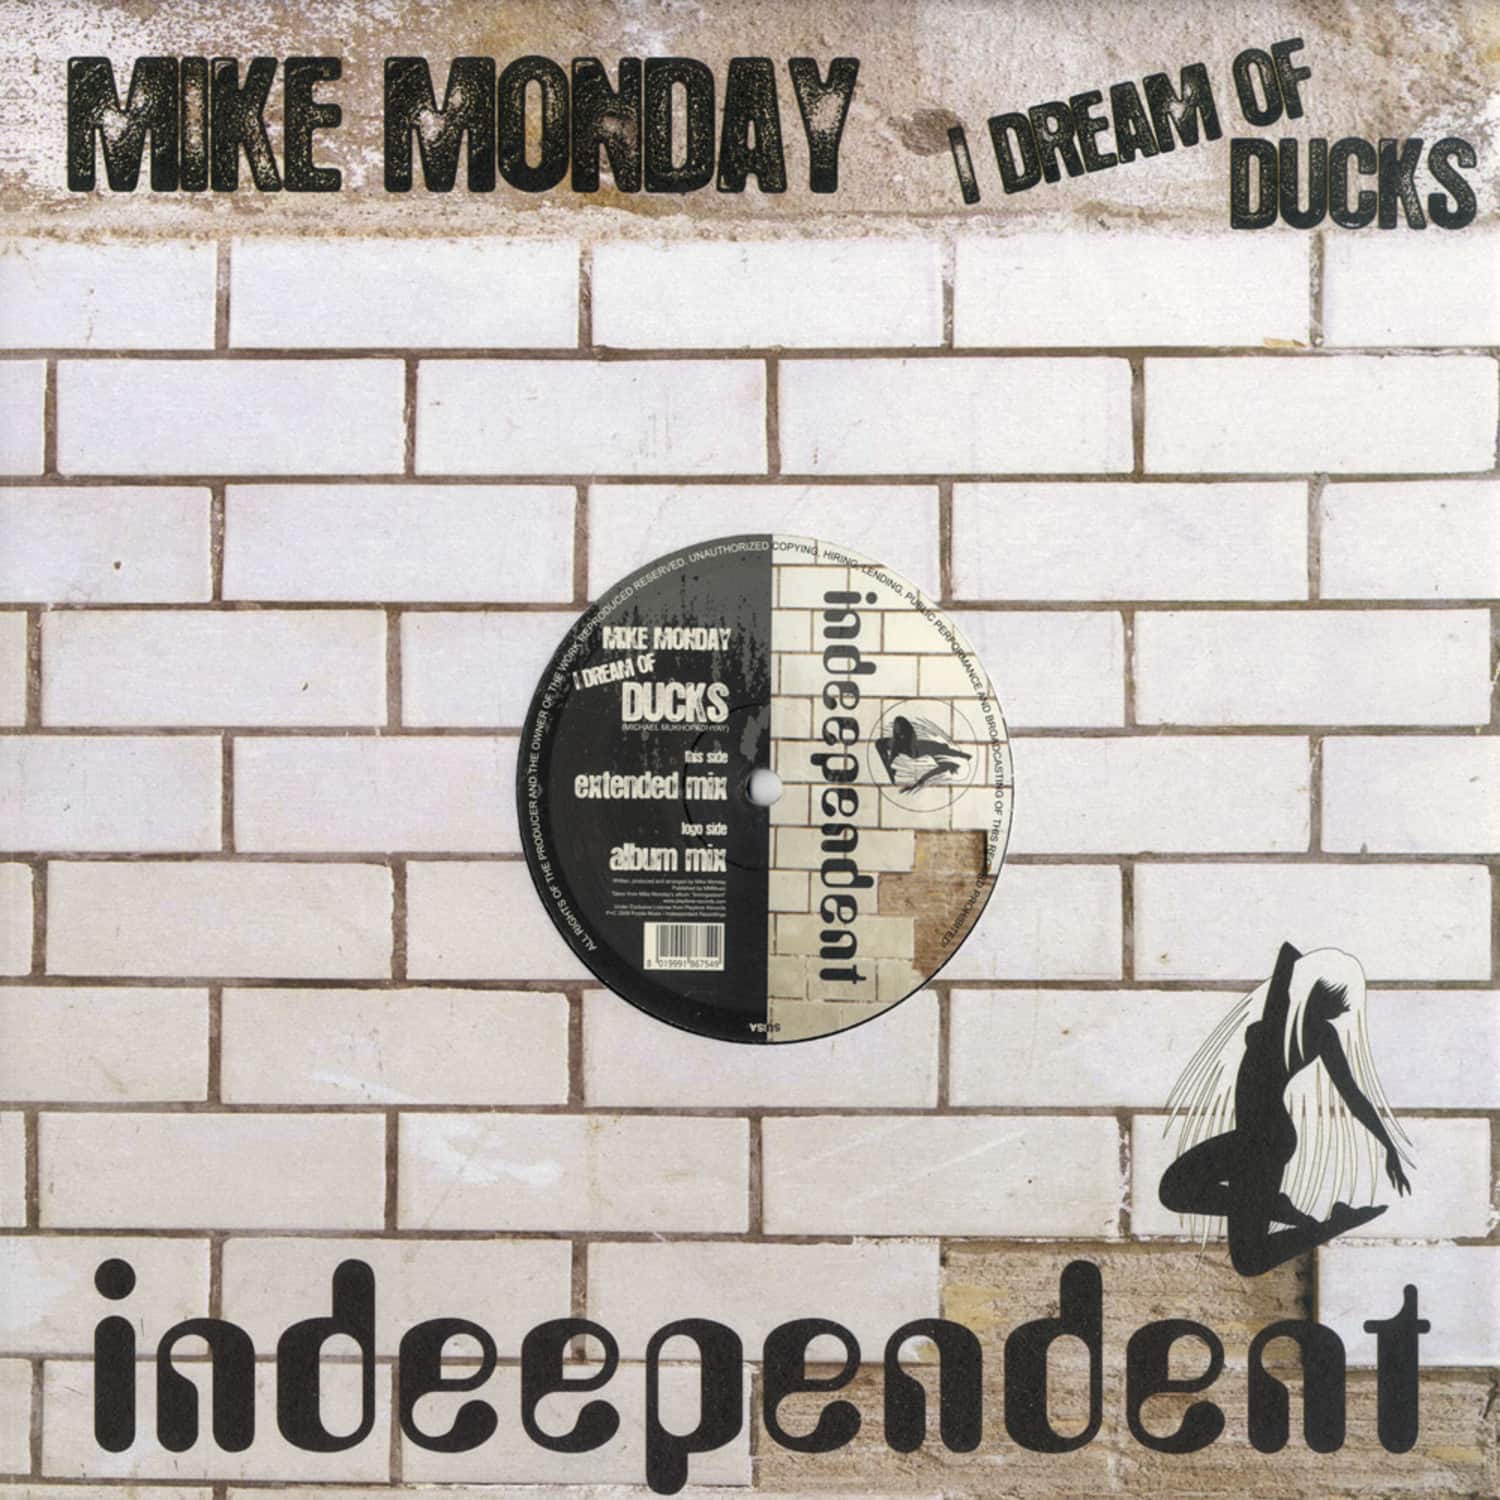 Mike Monday - I DREAM OF DUCKS